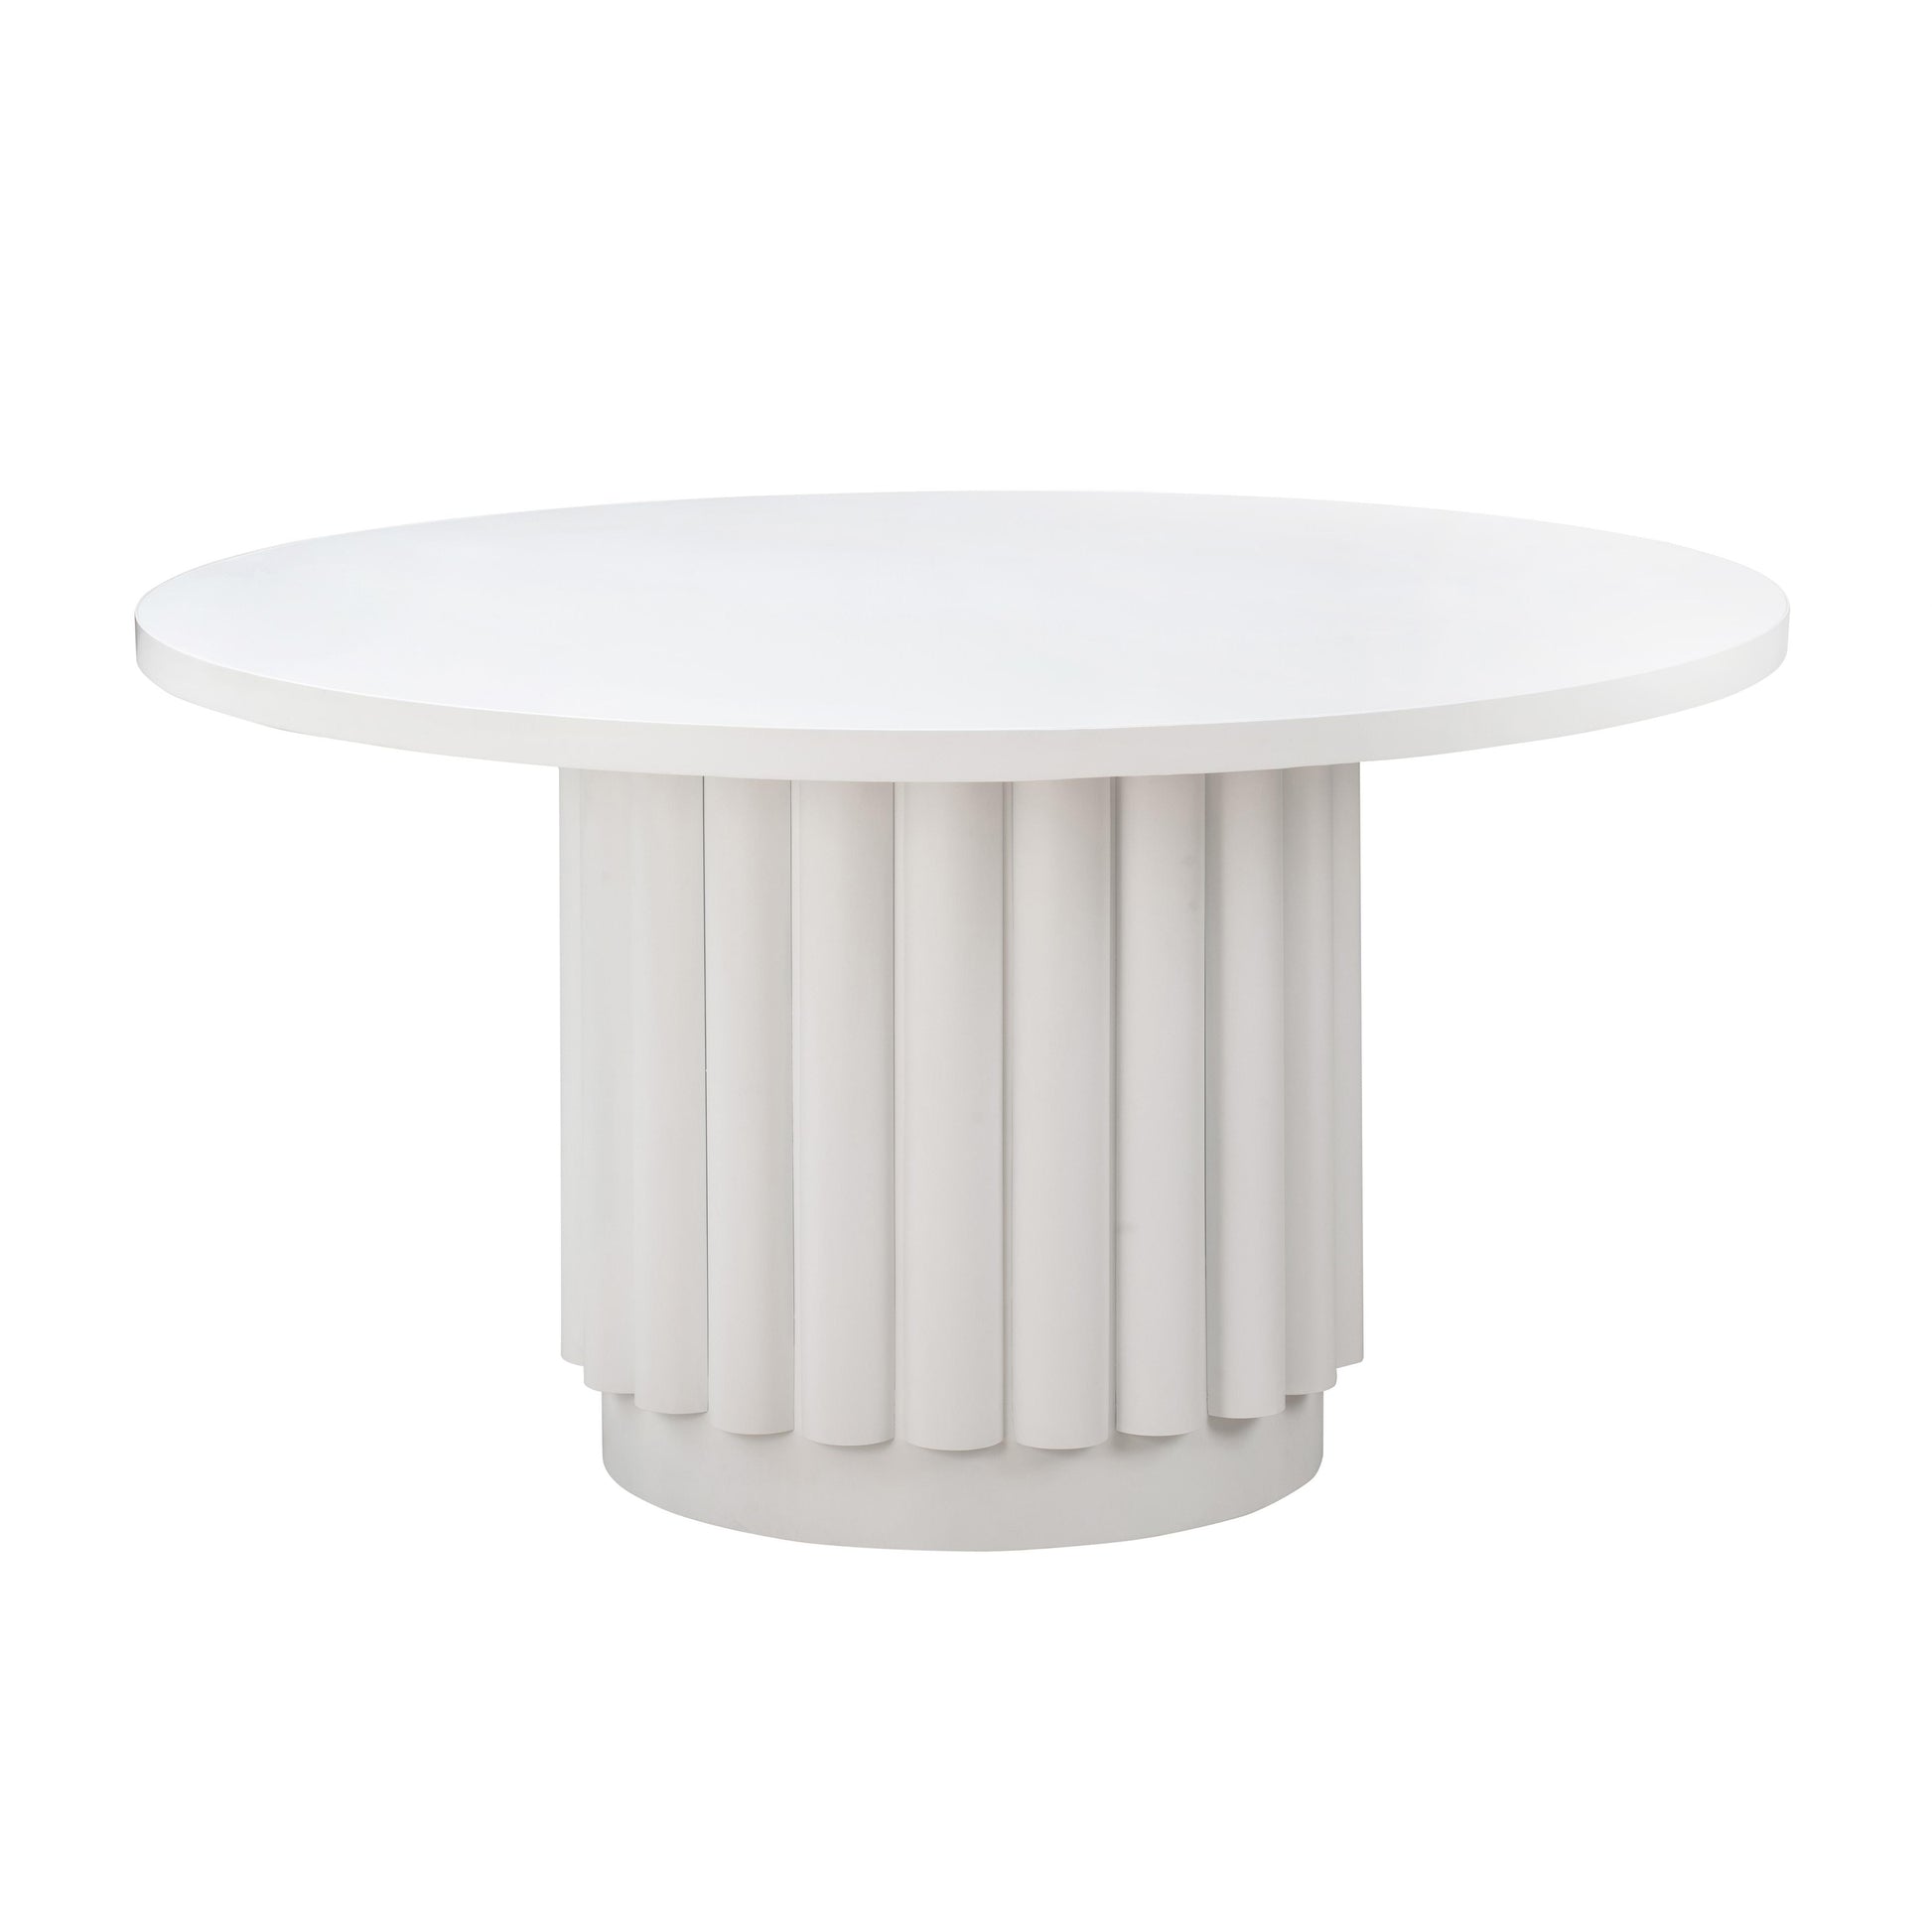 Tov Furniture Kali 55 White Round Dining Table